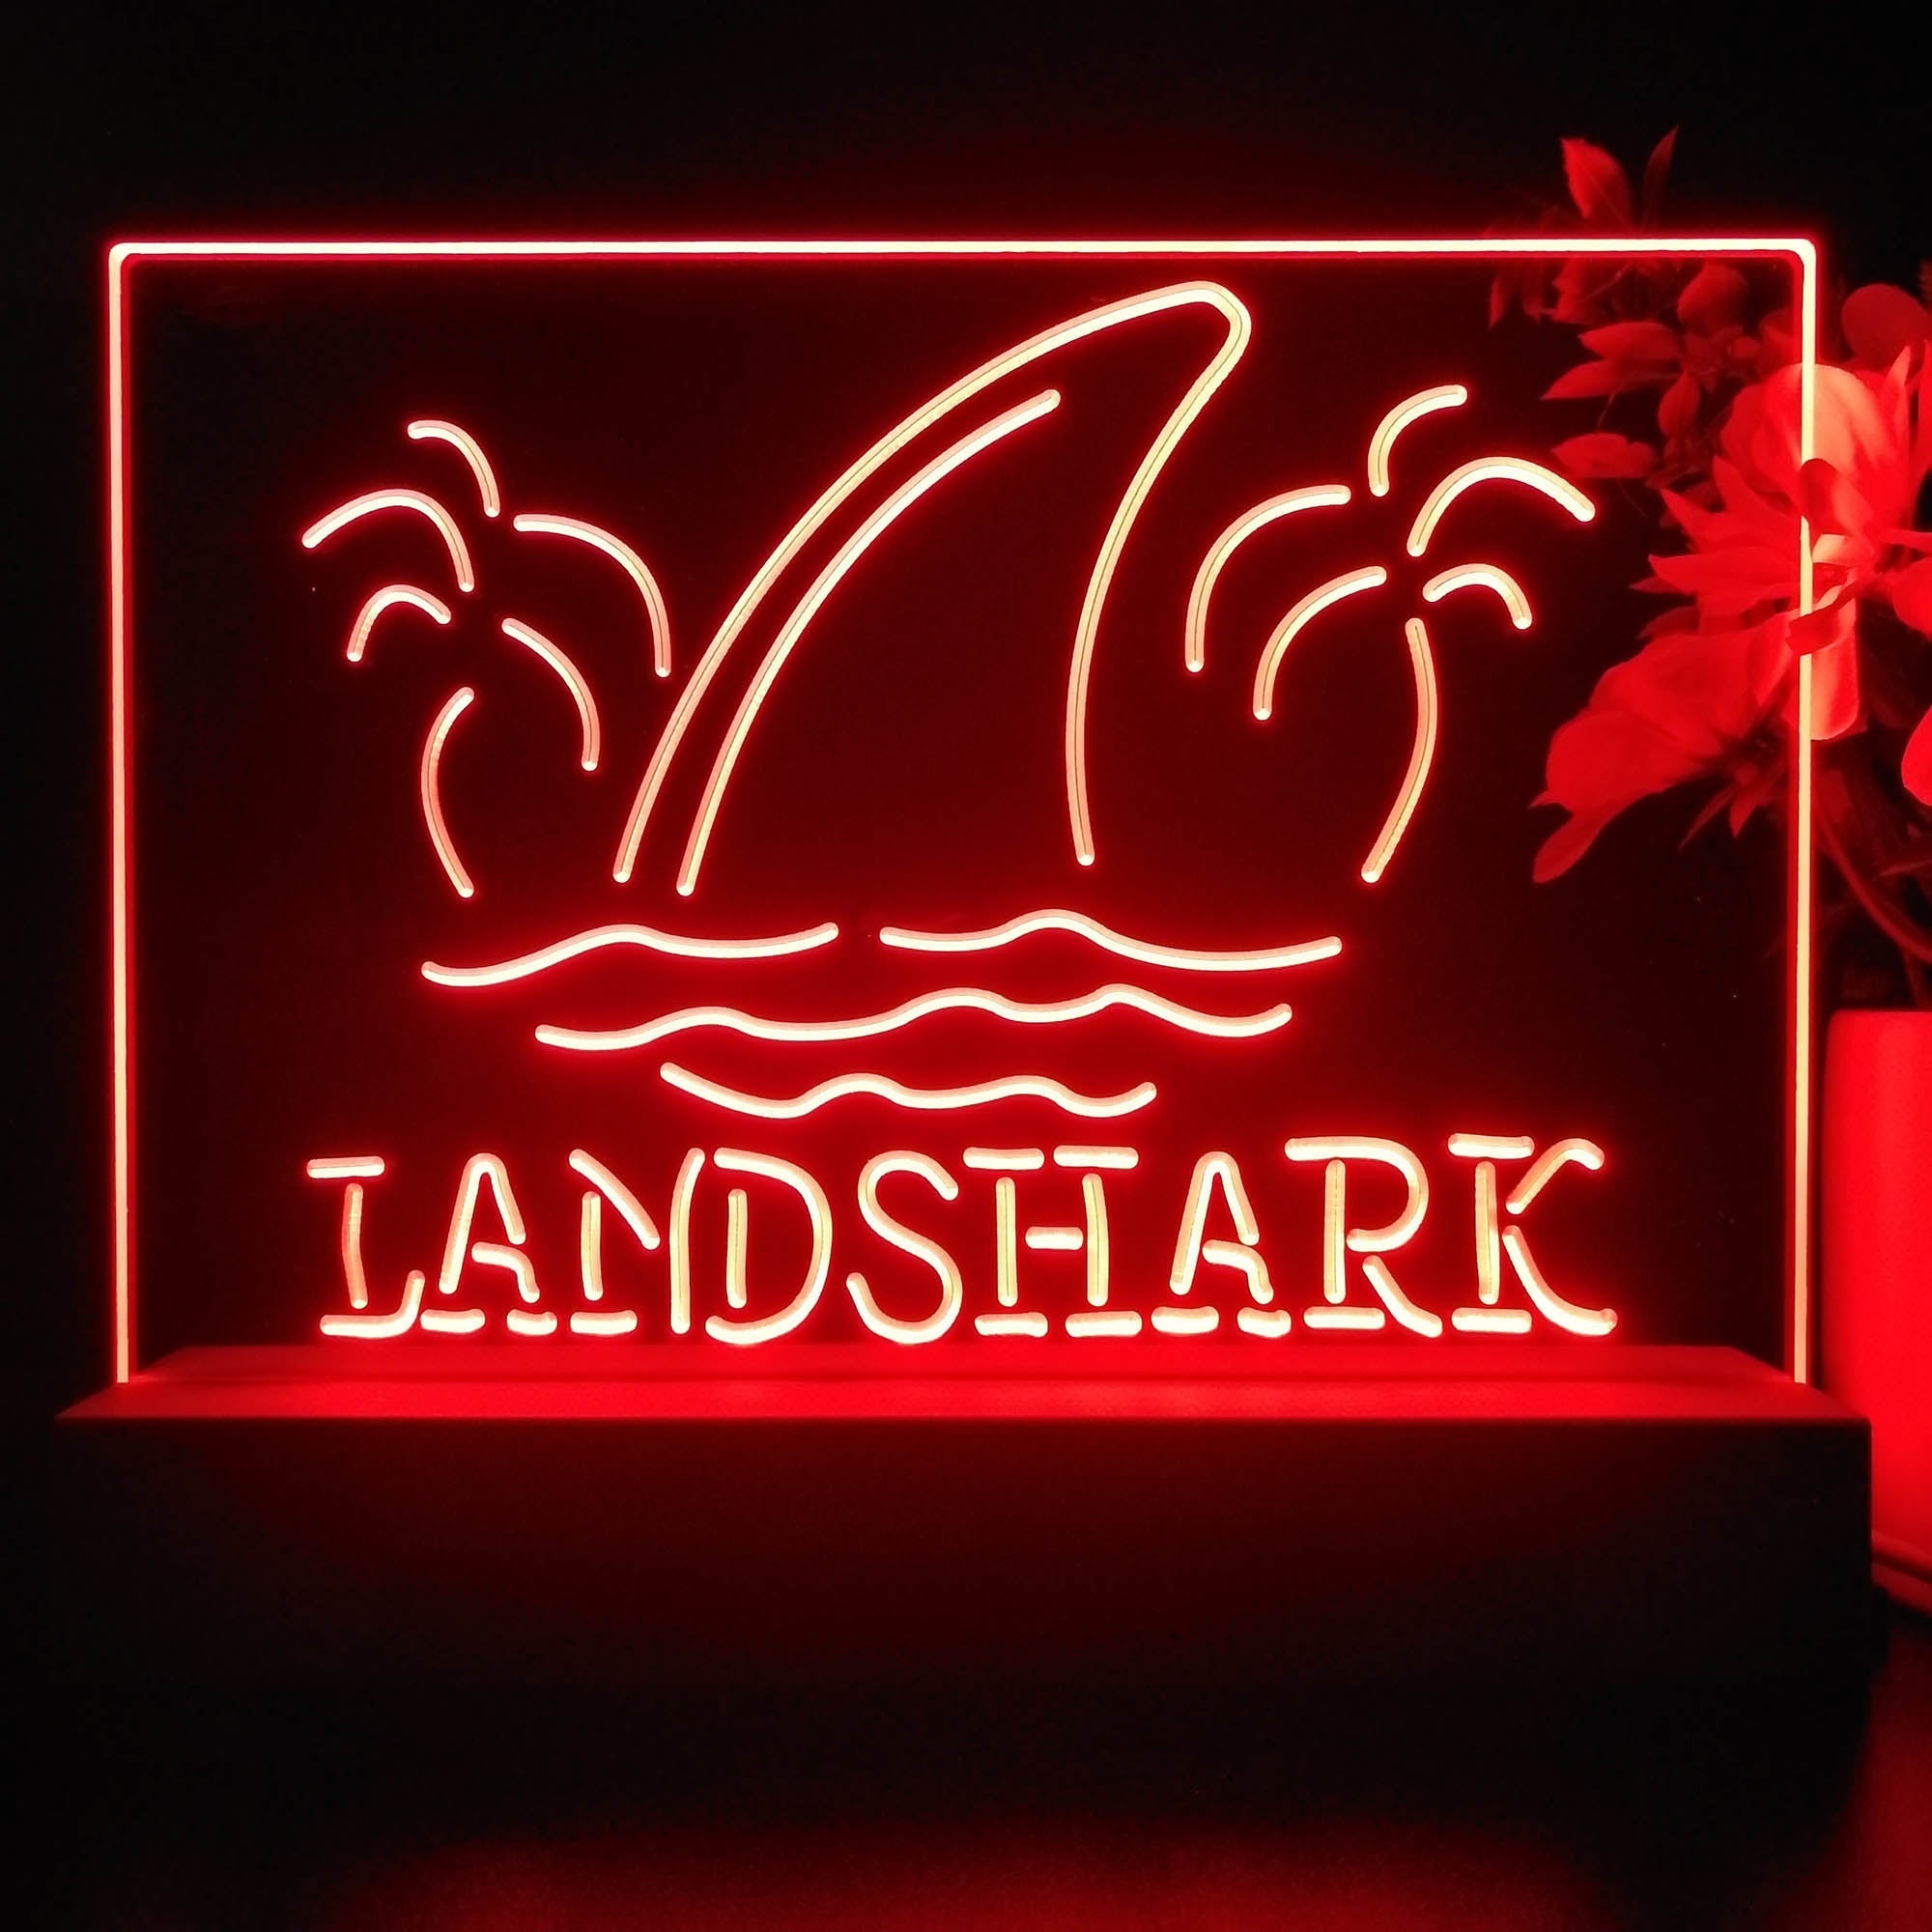 Landshark Palm Tree Island Neon Sign Pub Bar Lamp